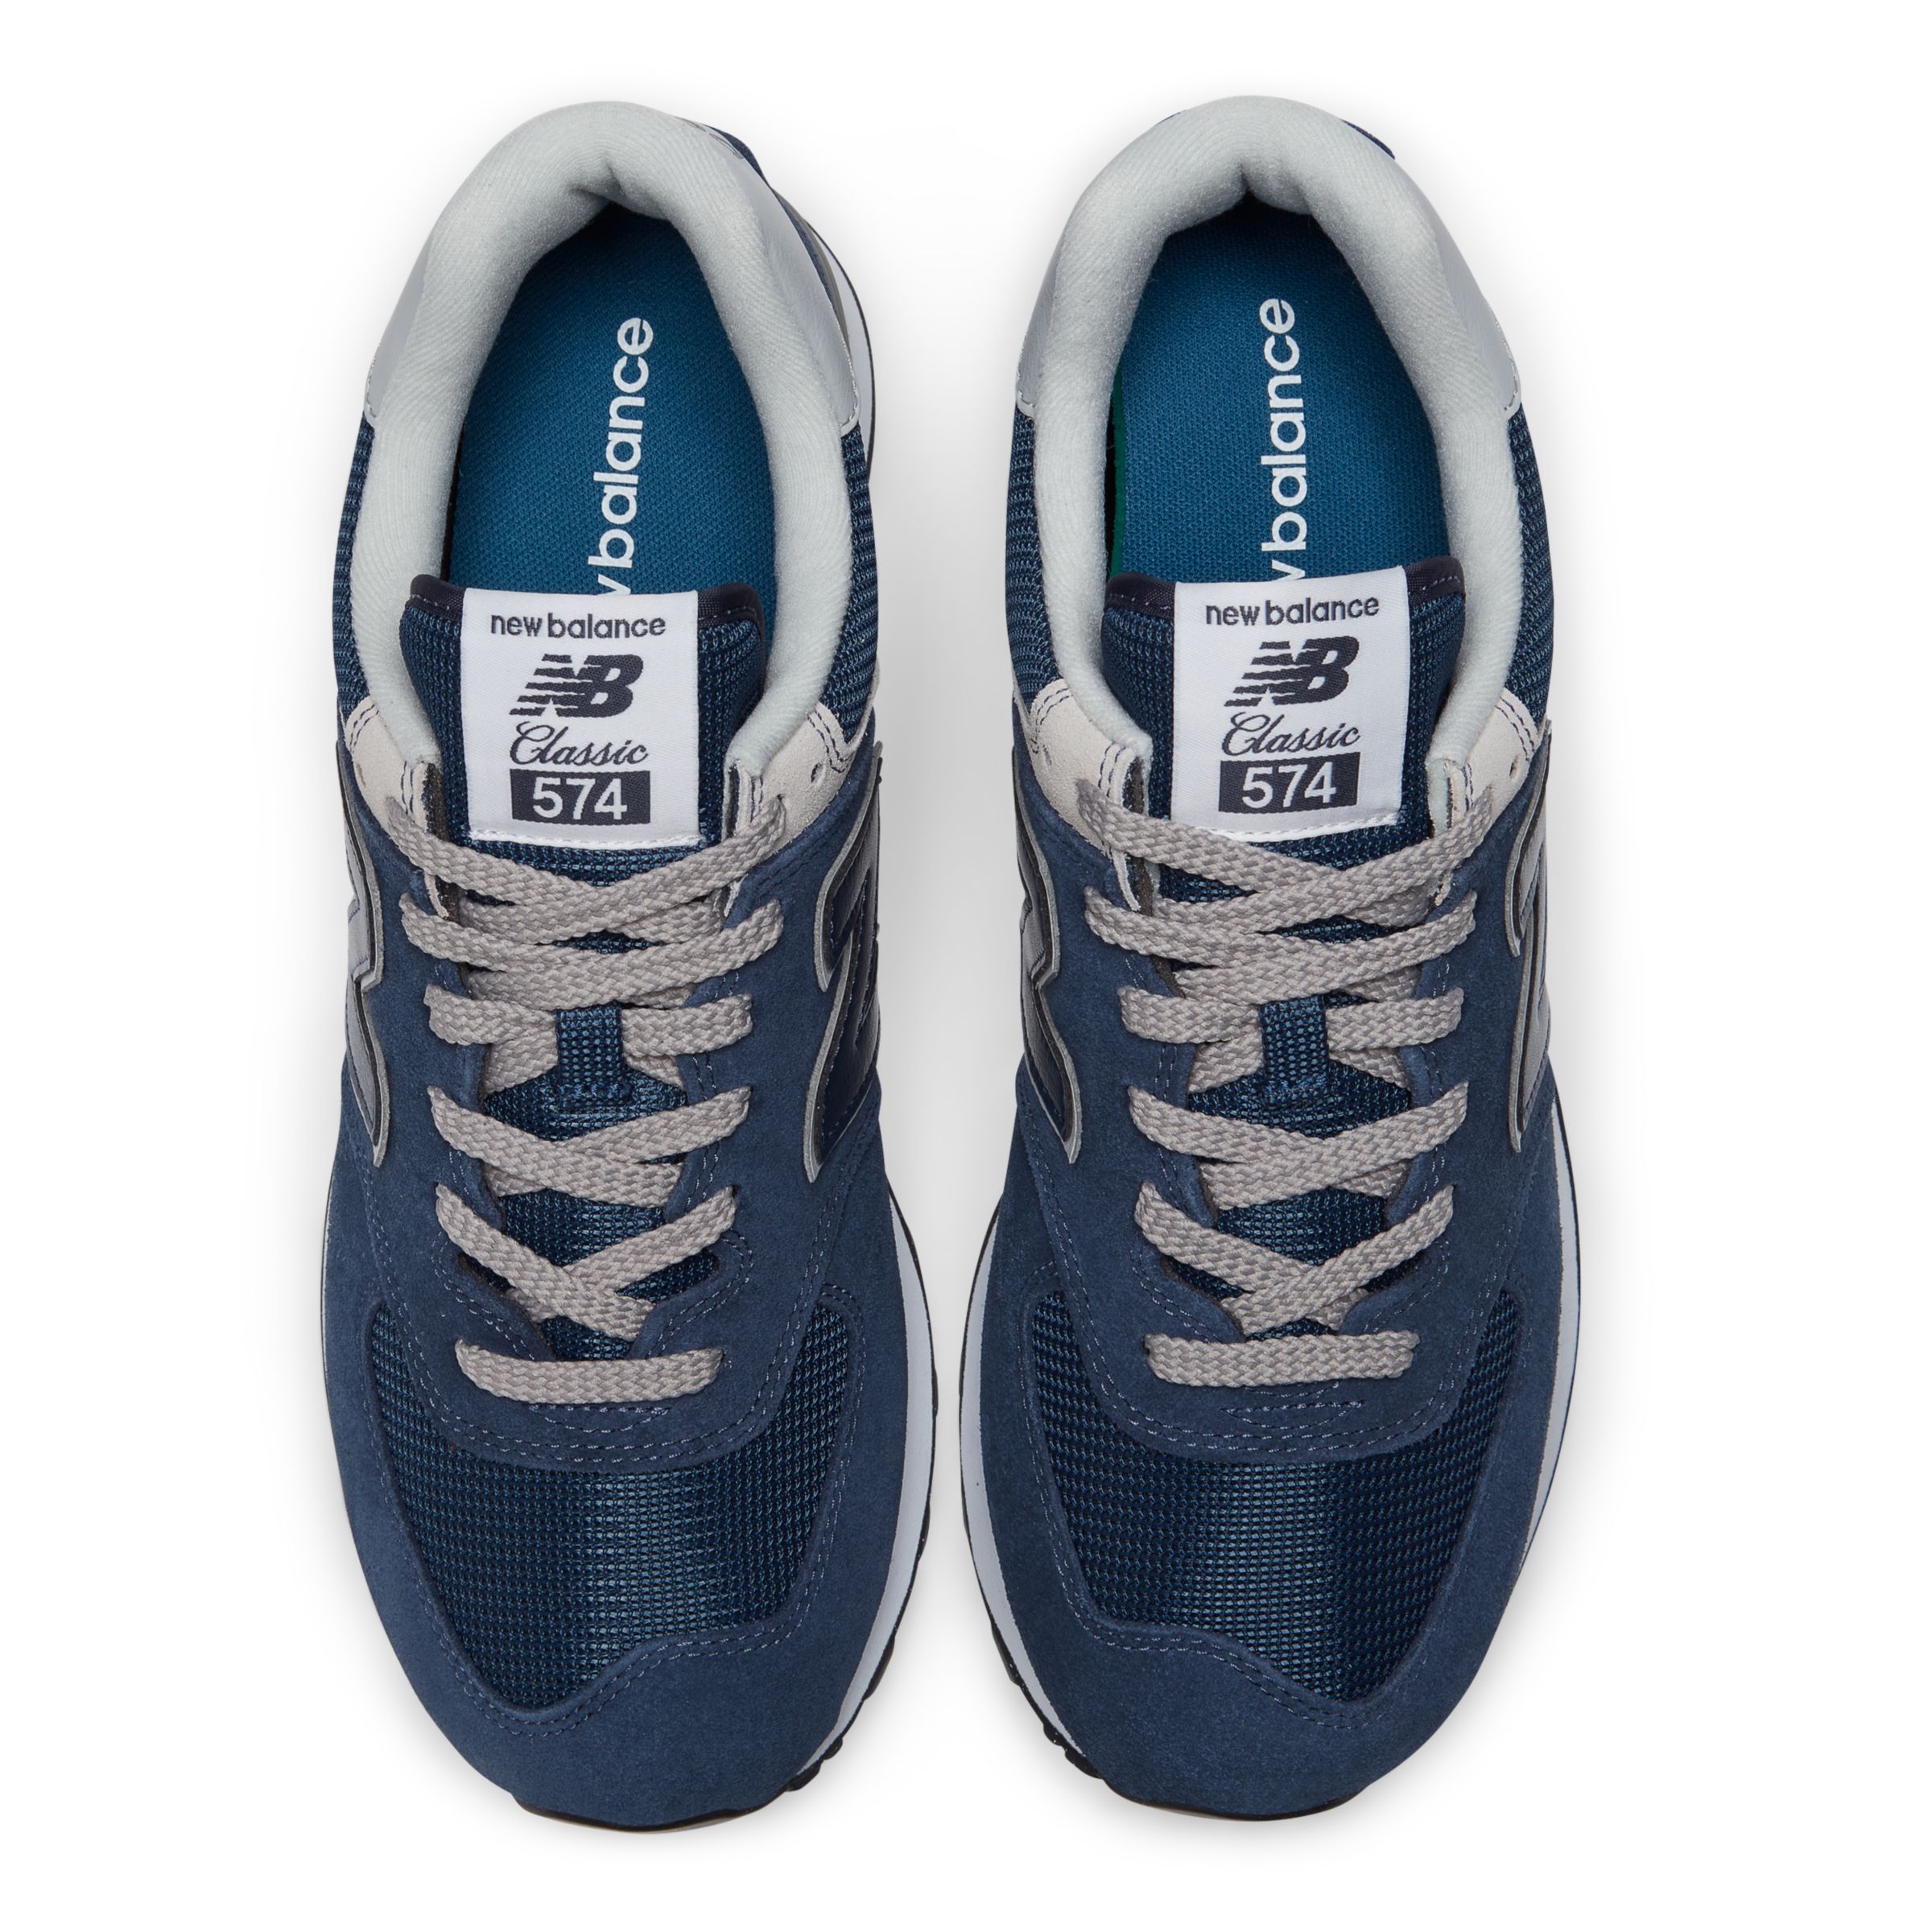 New Balance ML574 Men's Running Sport Lifestyle Shoes | eBay